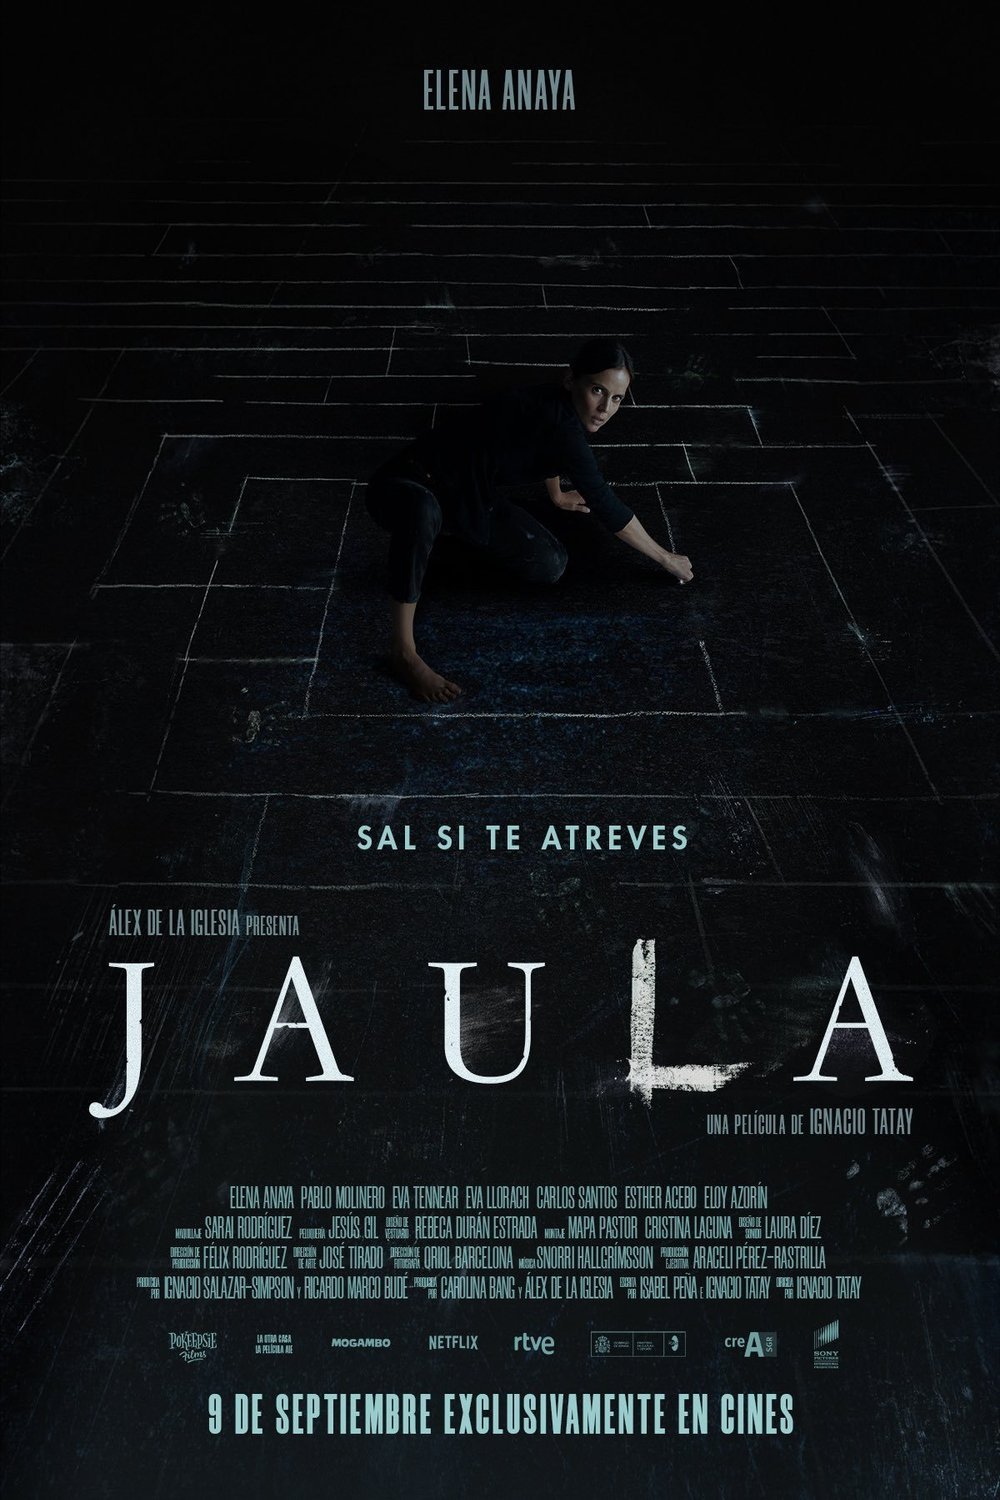 Spanish poster of the movie Jaula